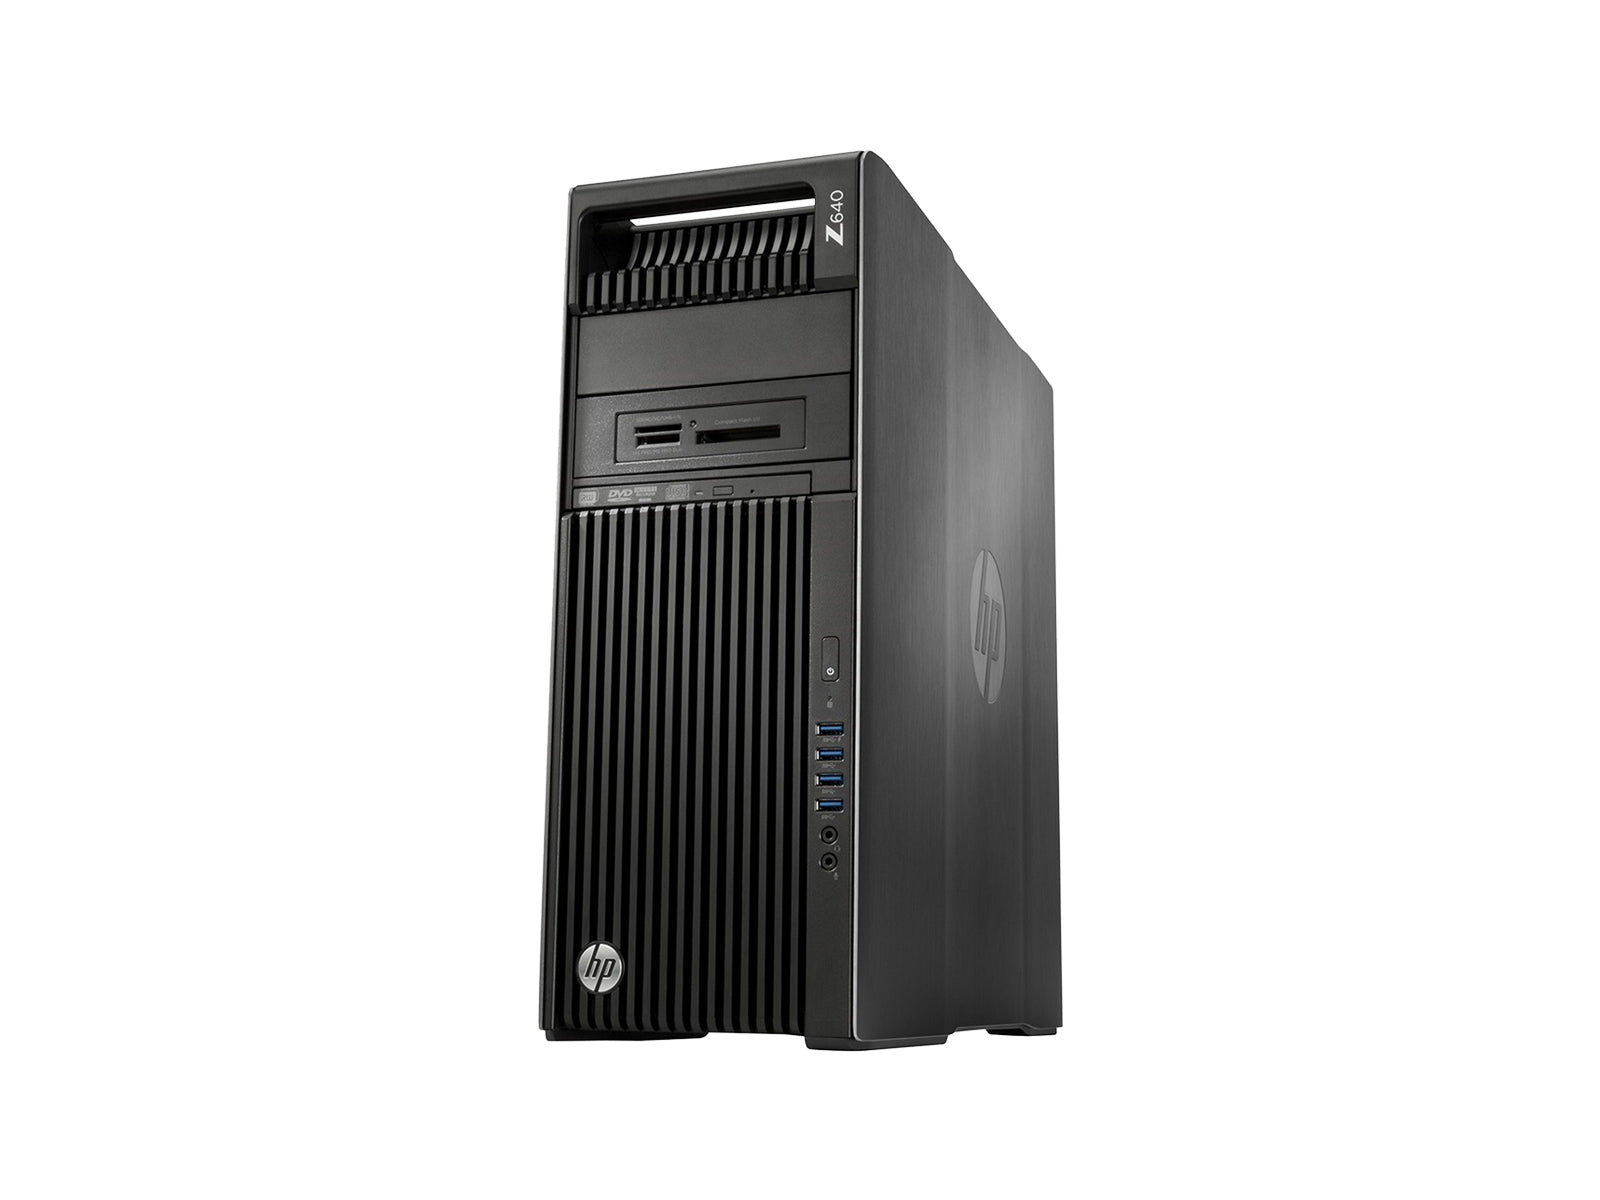 HP Z640 Workstation | Intel Xeon E5-2640 @ 3.0GHz | 6-core | 64GB ECC DDR4 | 500GB SSD | AMD W5100 | Win10 Pro Monitors.com 